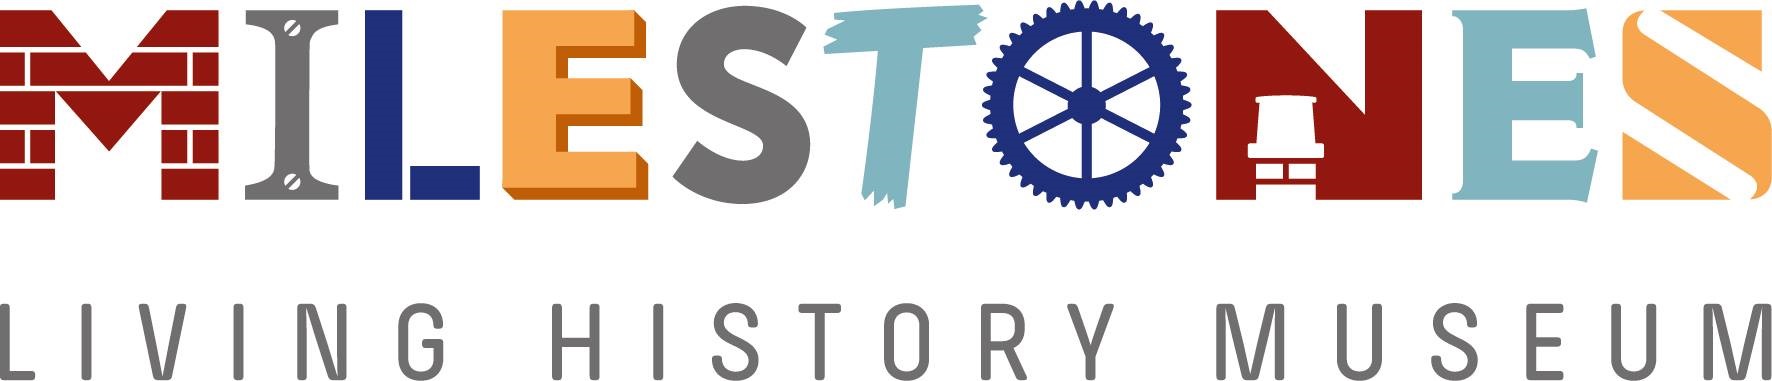 milestones_logo 3 2020.jpg